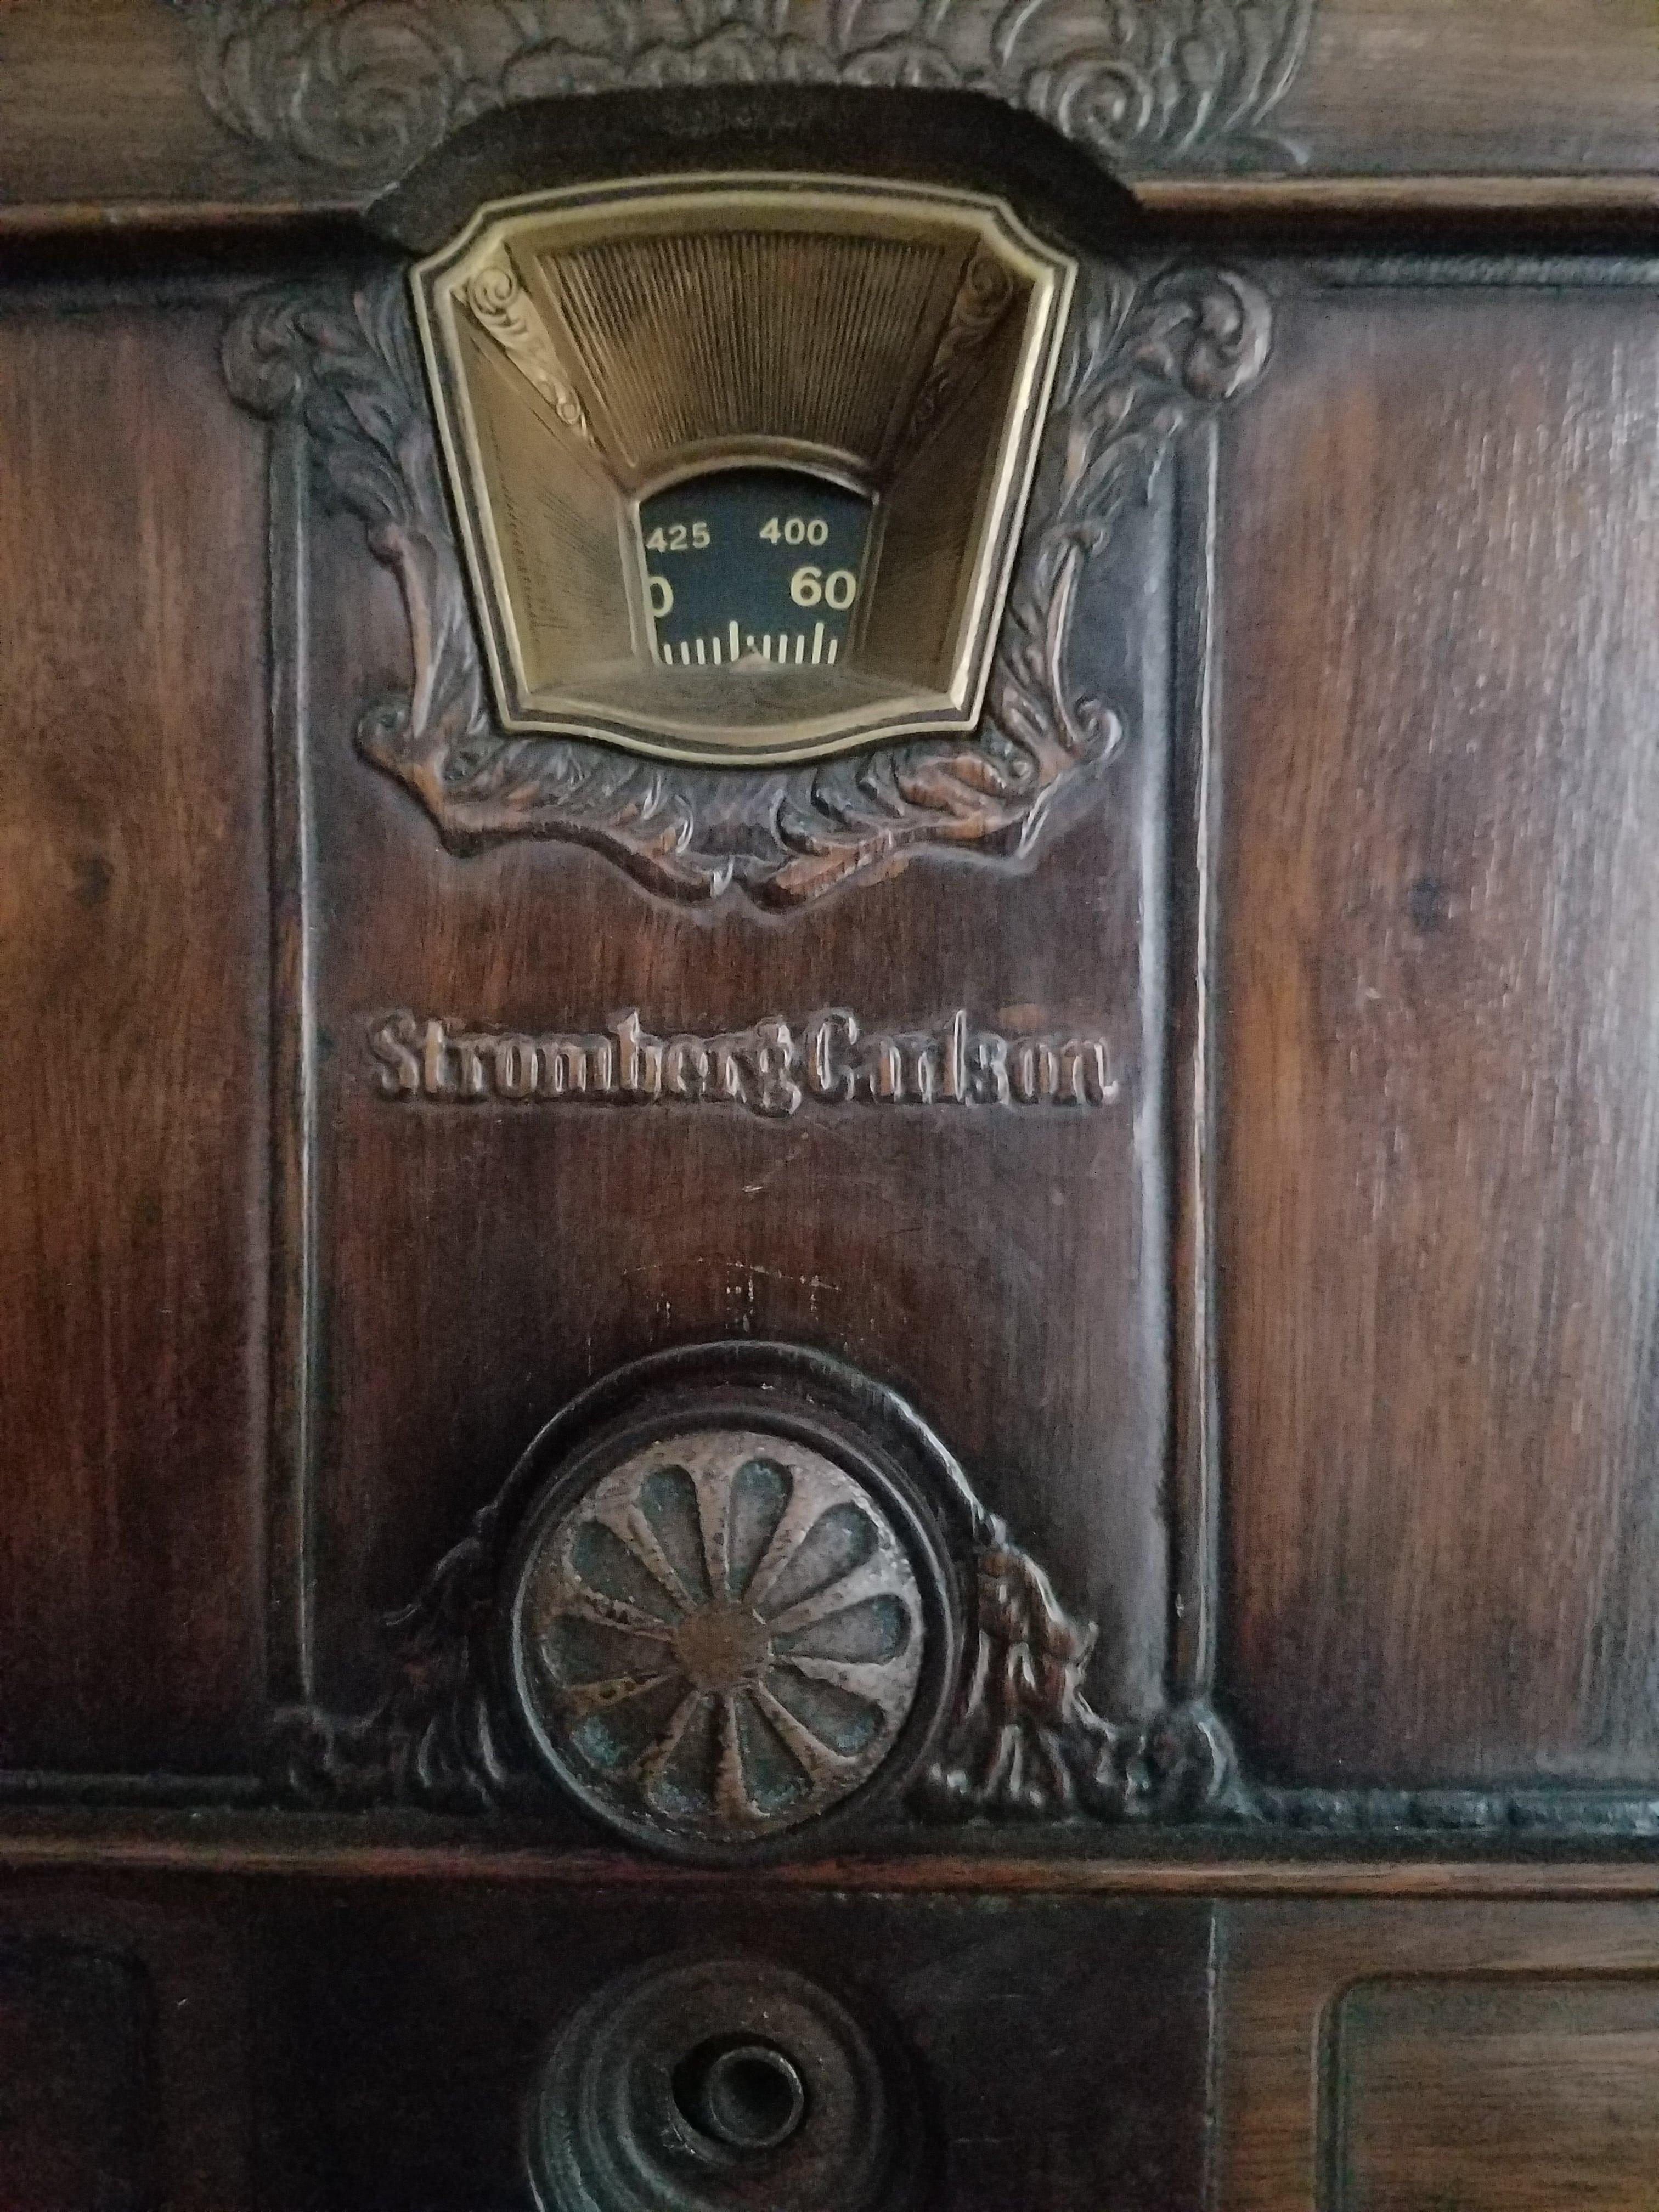 Gothic Revival Mahogany Antique Cabinet with Stromberg-Carlson Radio

34